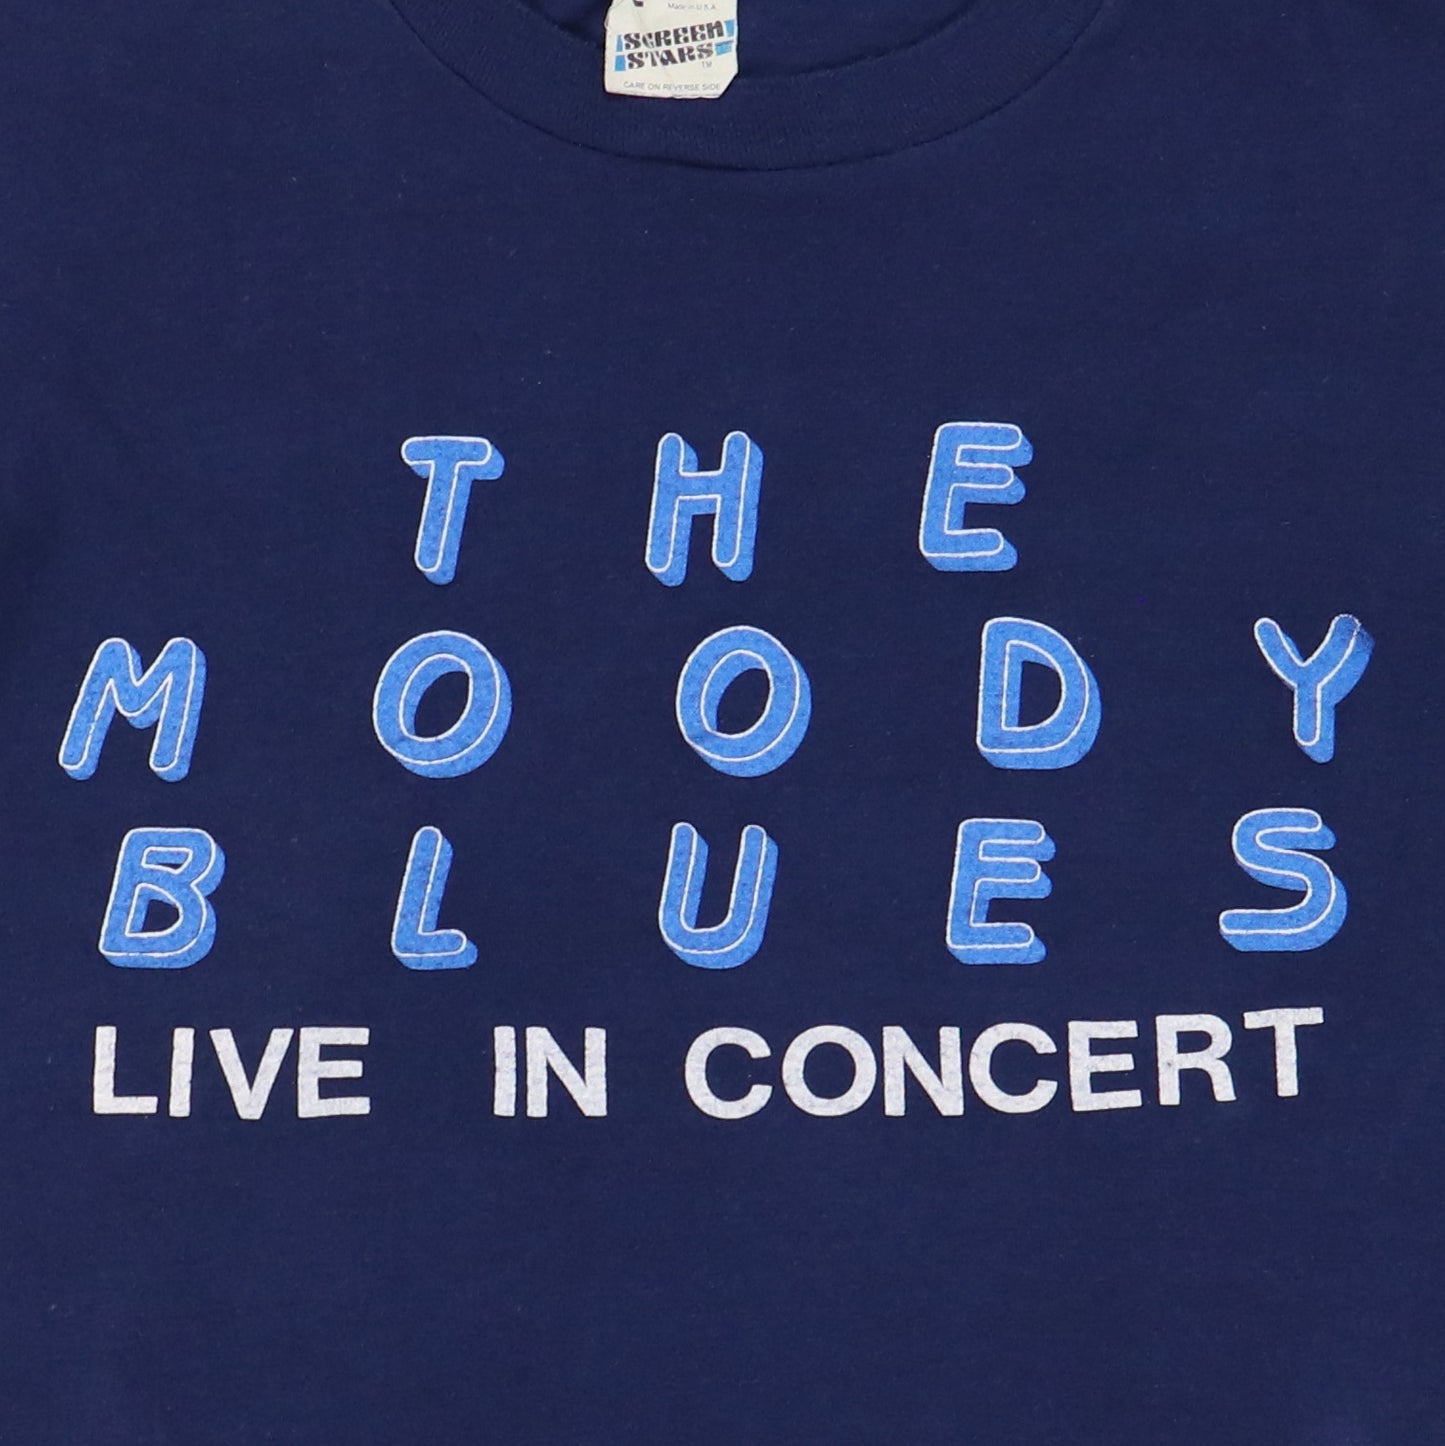 1983 Moody Blues The Present Shirt